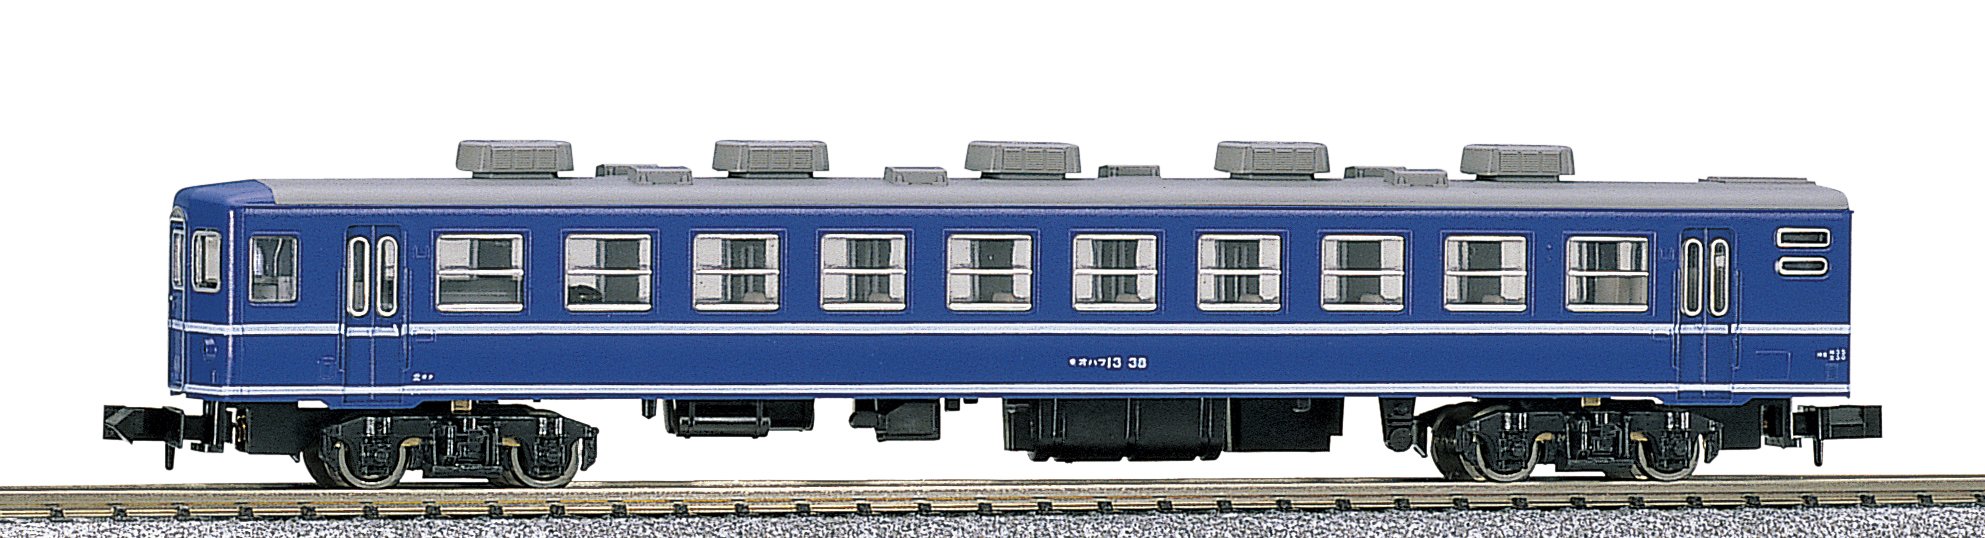 Kato N Gauge 5017 Passenger Car - Railway Model Ohafu 13